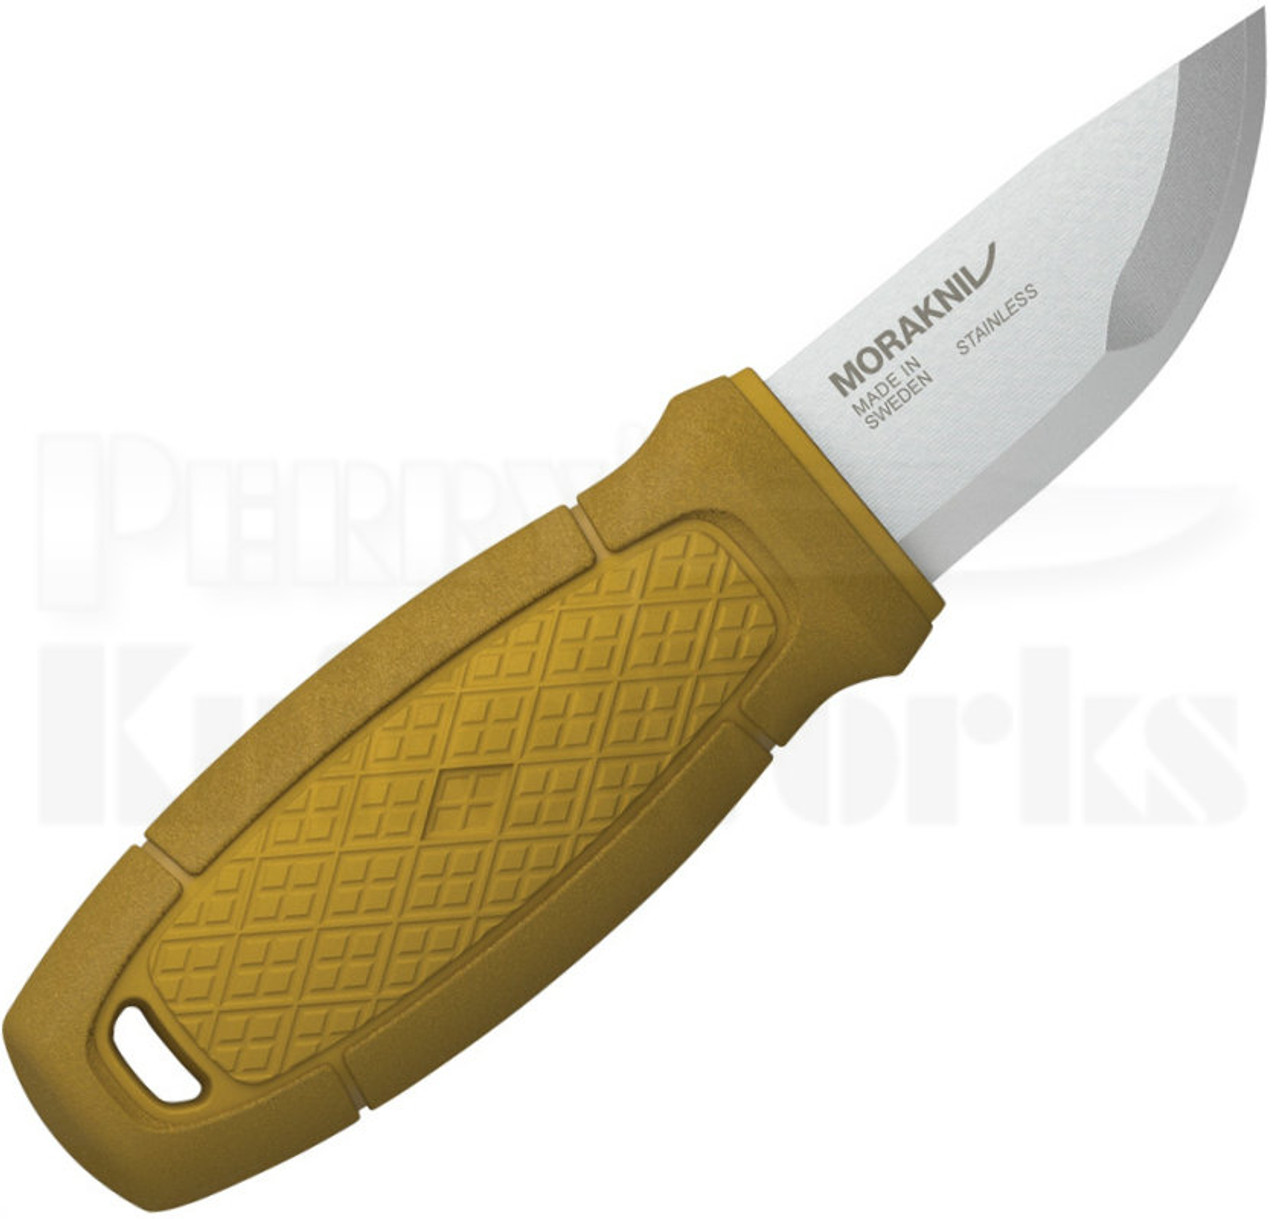 Morakniv Eldris Light Duty fixed blade knife review - a tough